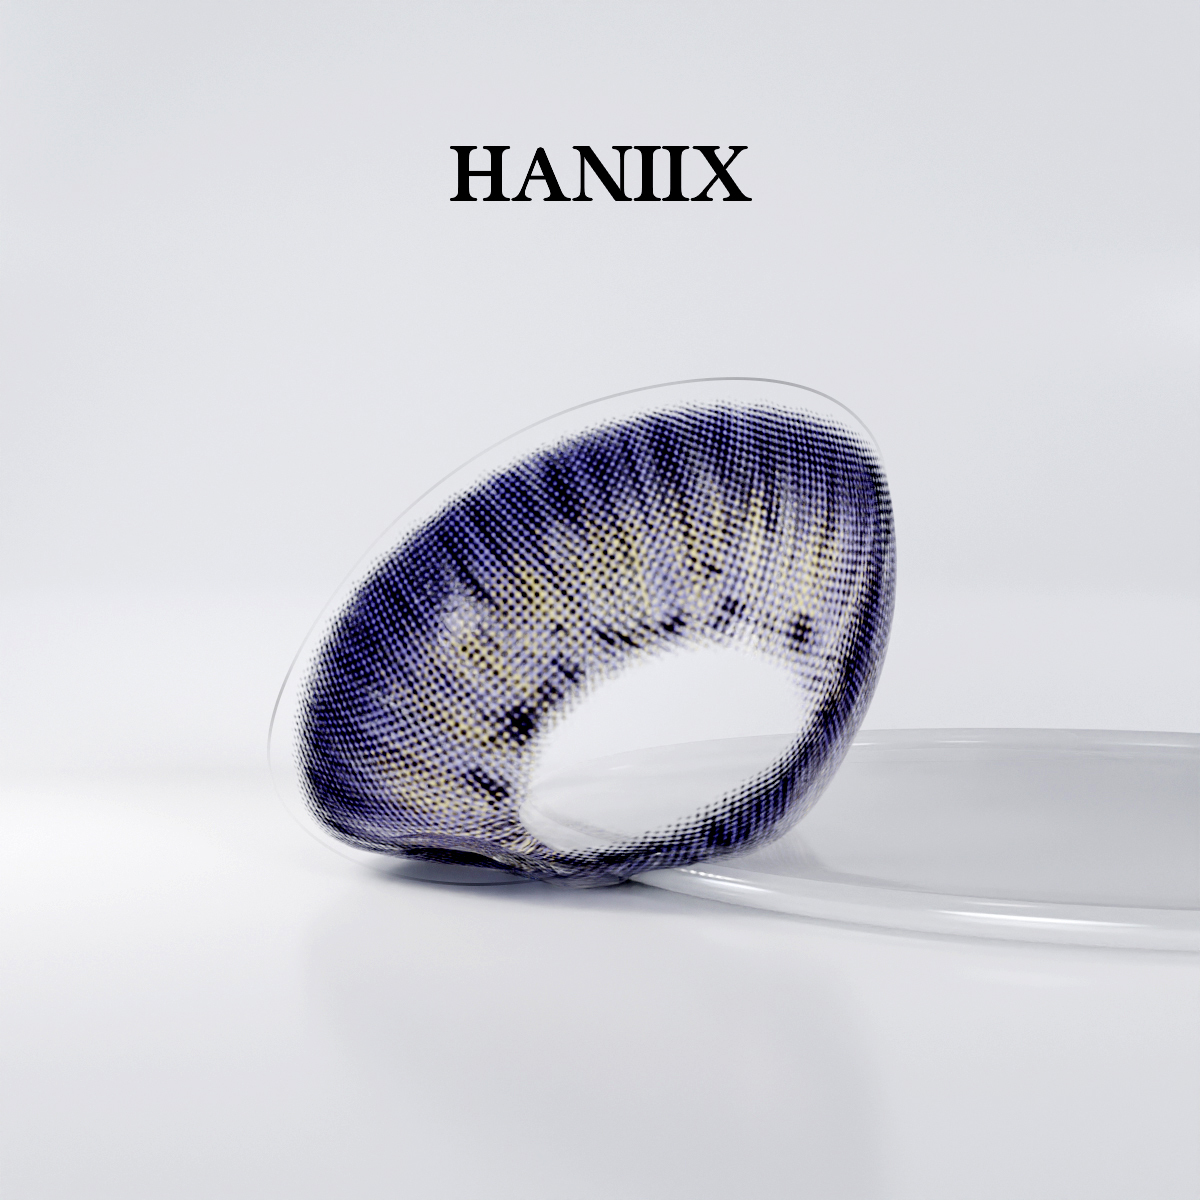 Iceland Violet - Yearly, 2 lenses - HANIIX